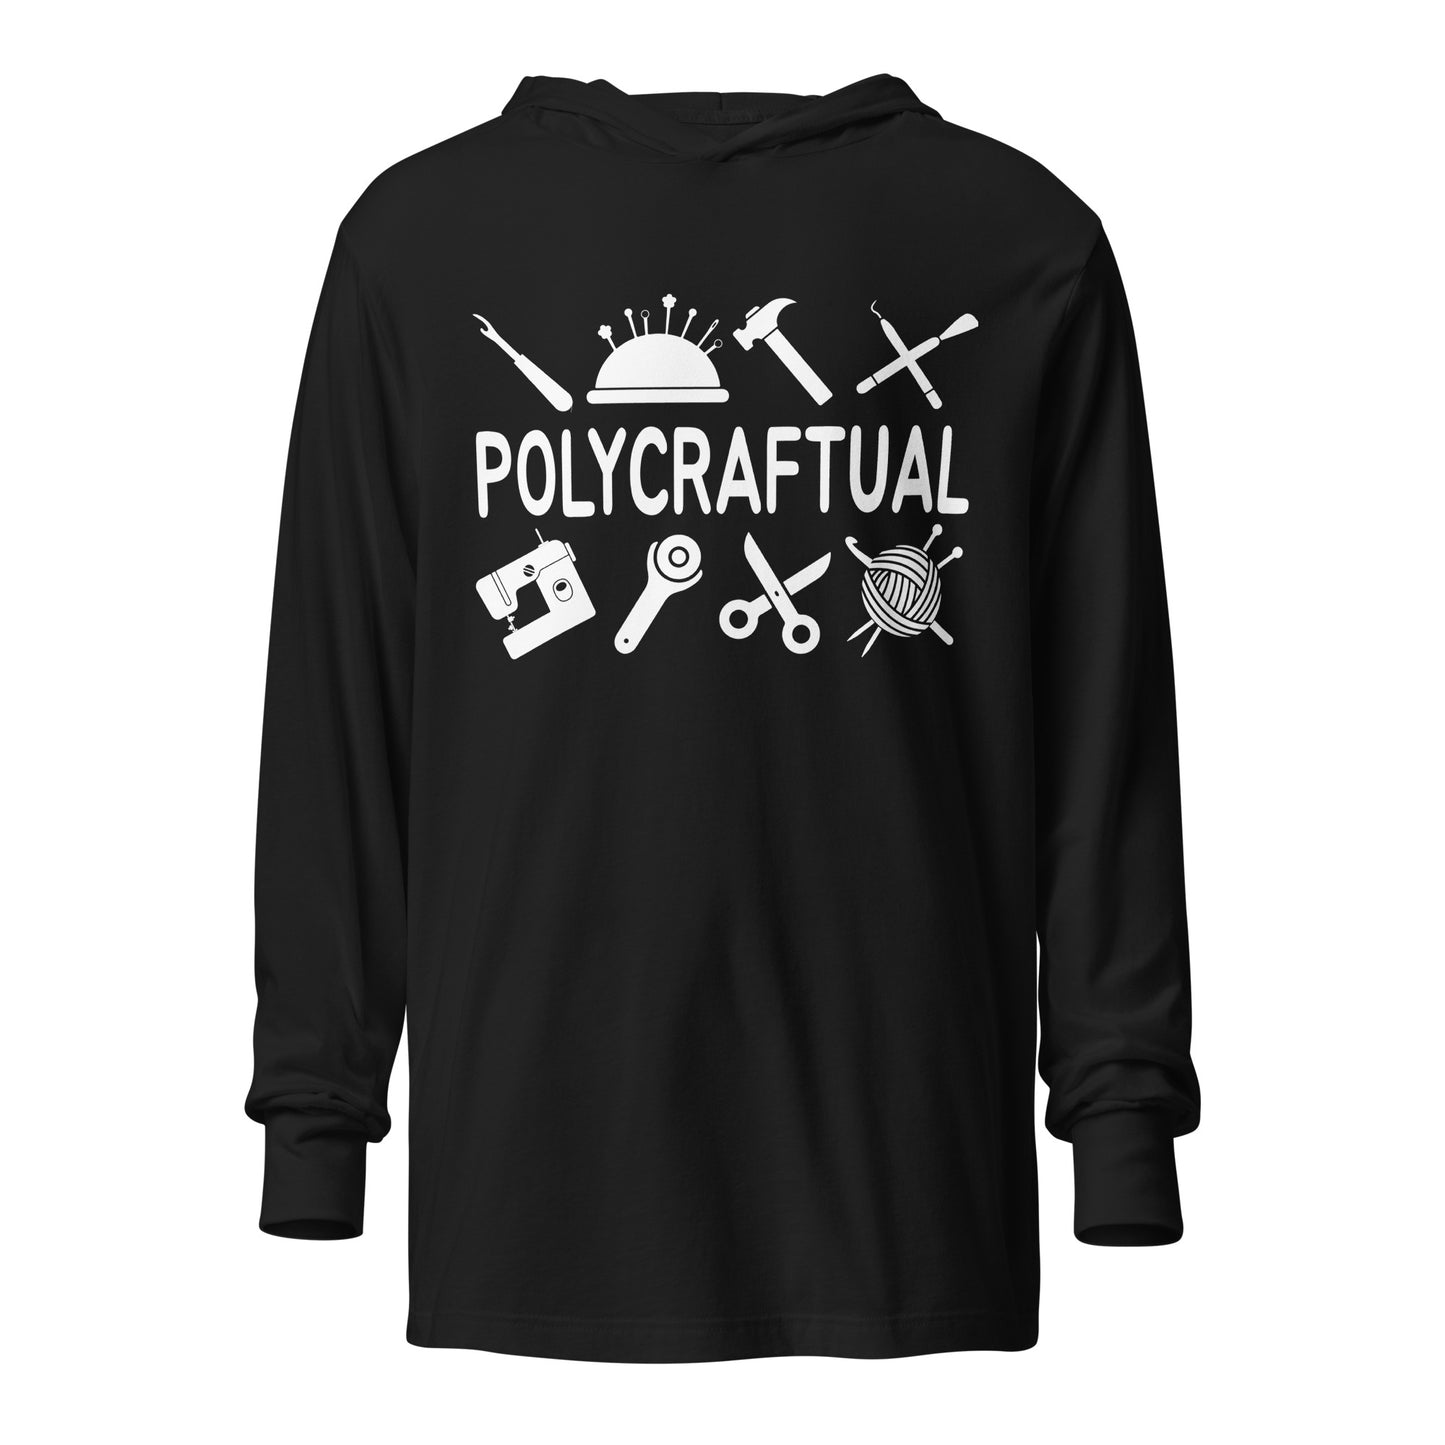 Polycraftual Hooded long-sleeve tee